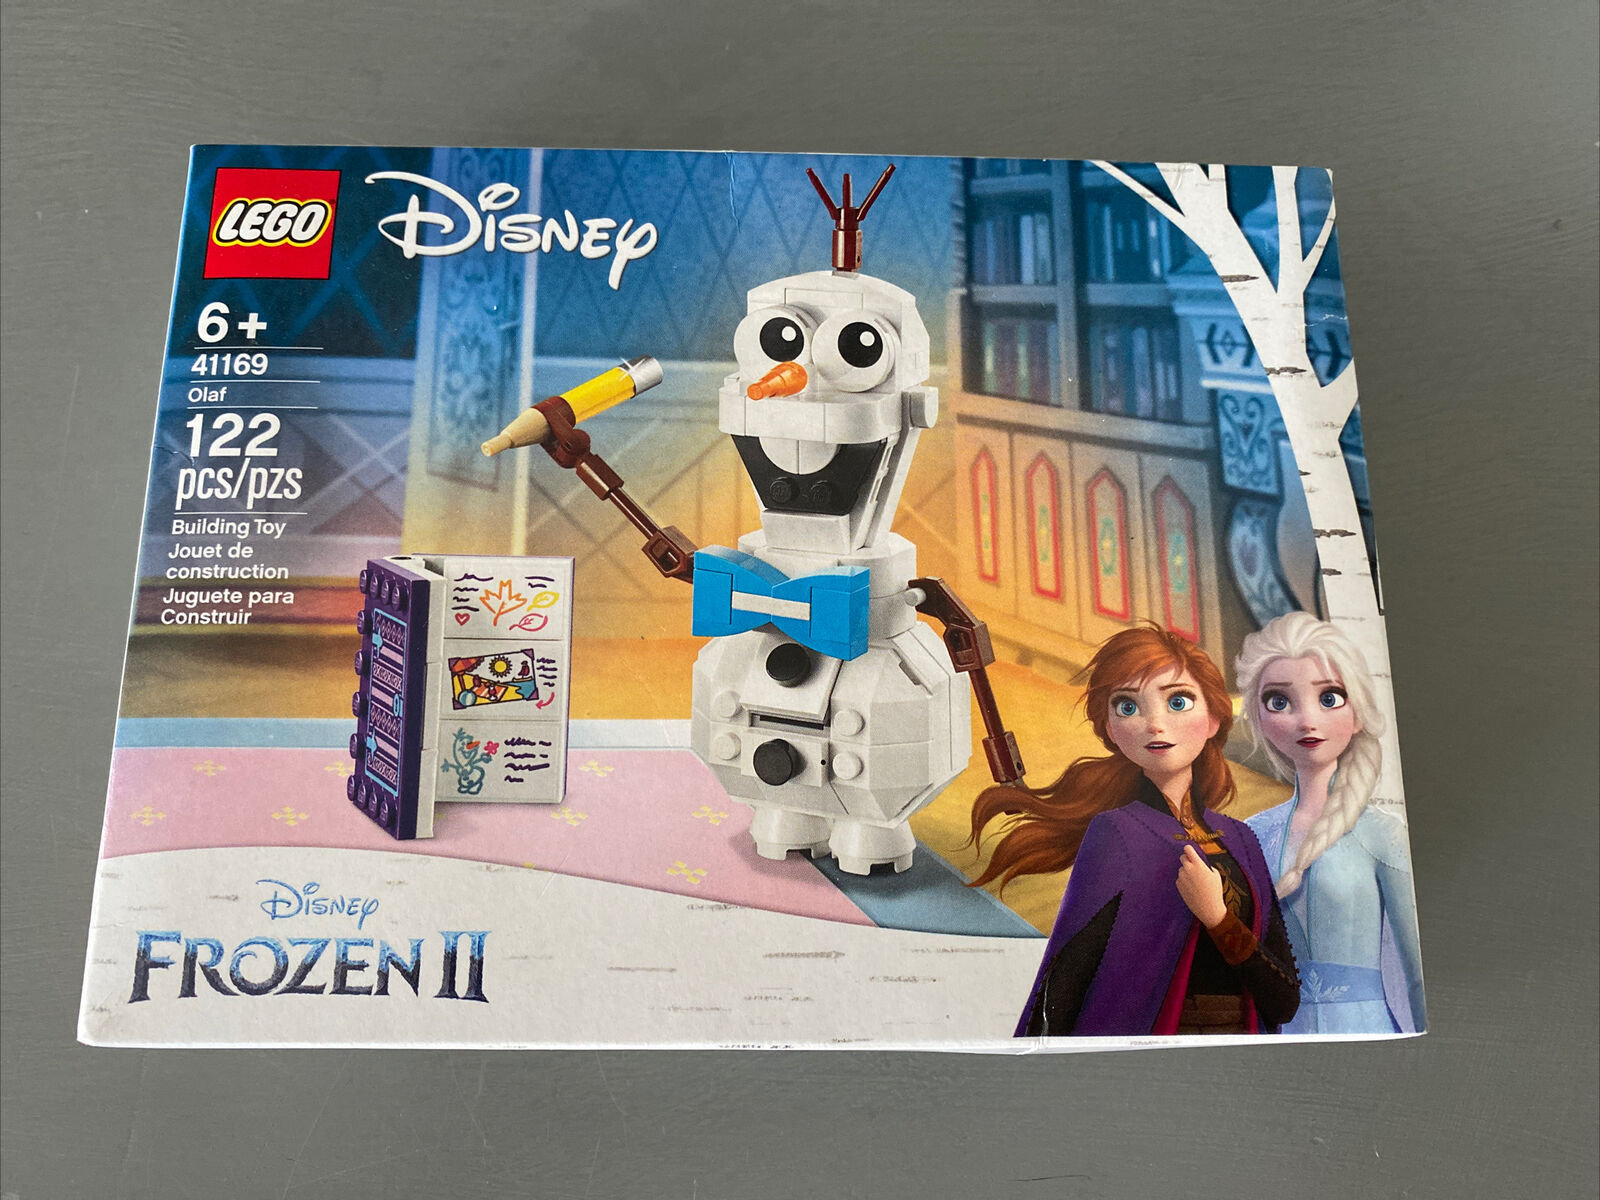 LEGO Disney Building Set - Frozen II (2) Olaf 122 PCS #41169 New In Box